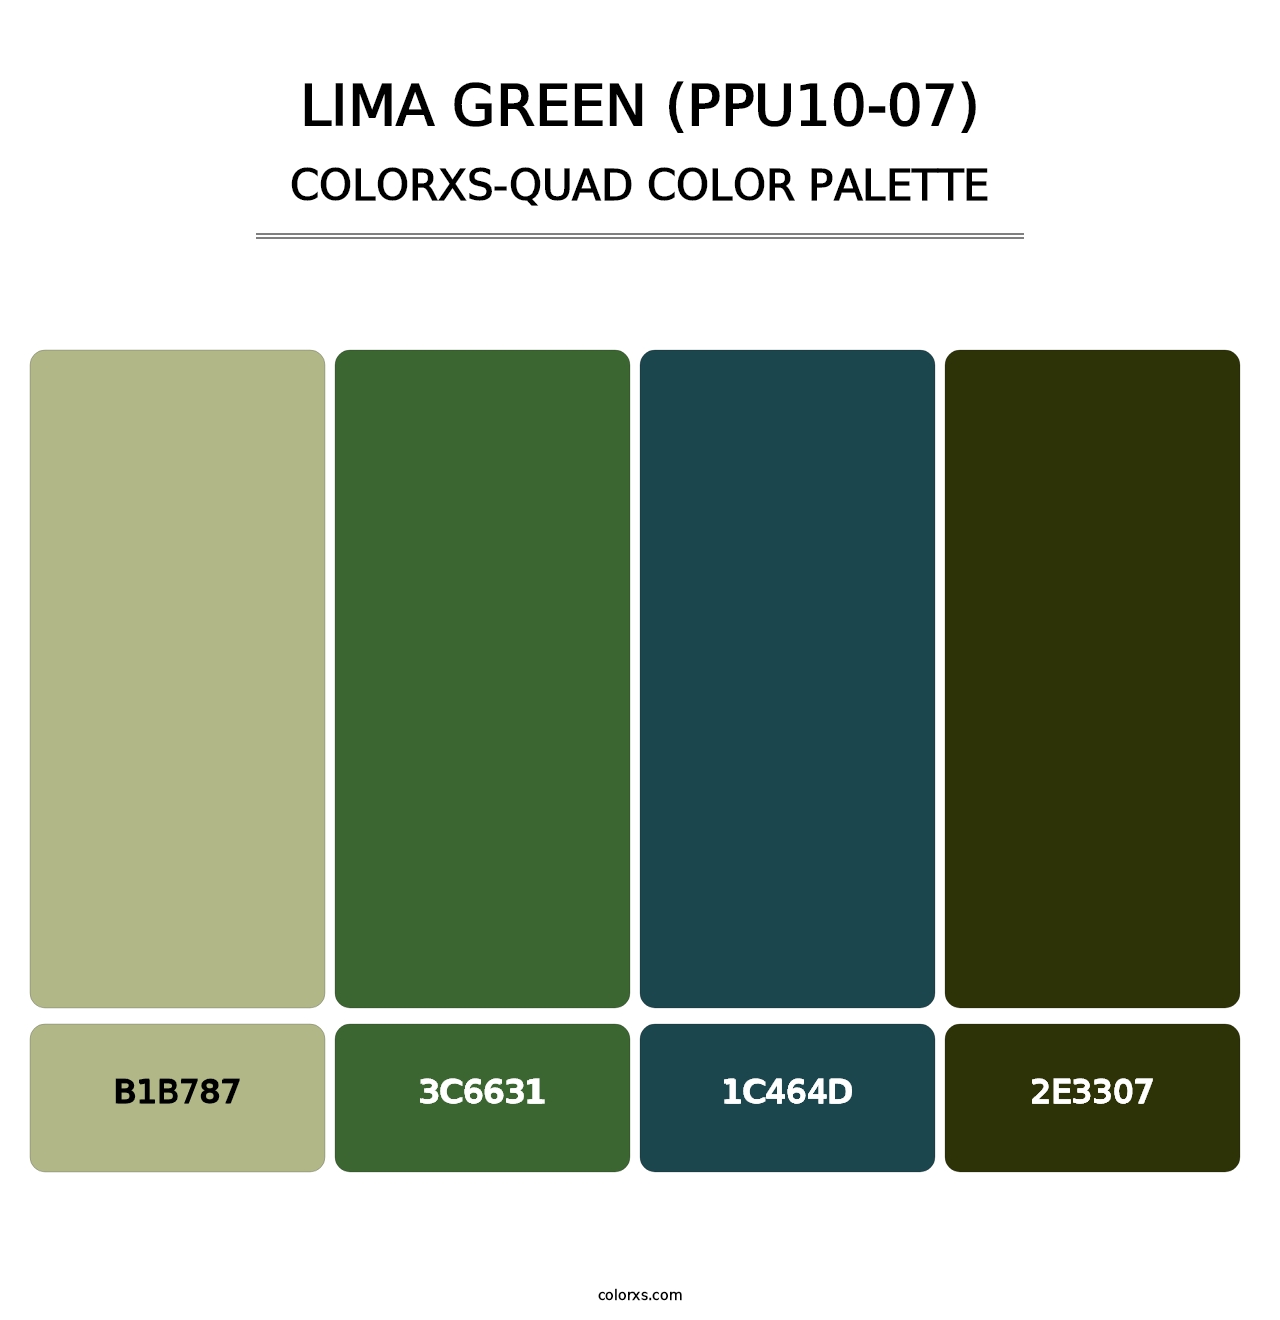 Lima Green (PPU10-07) - Colorxs Quad Palette